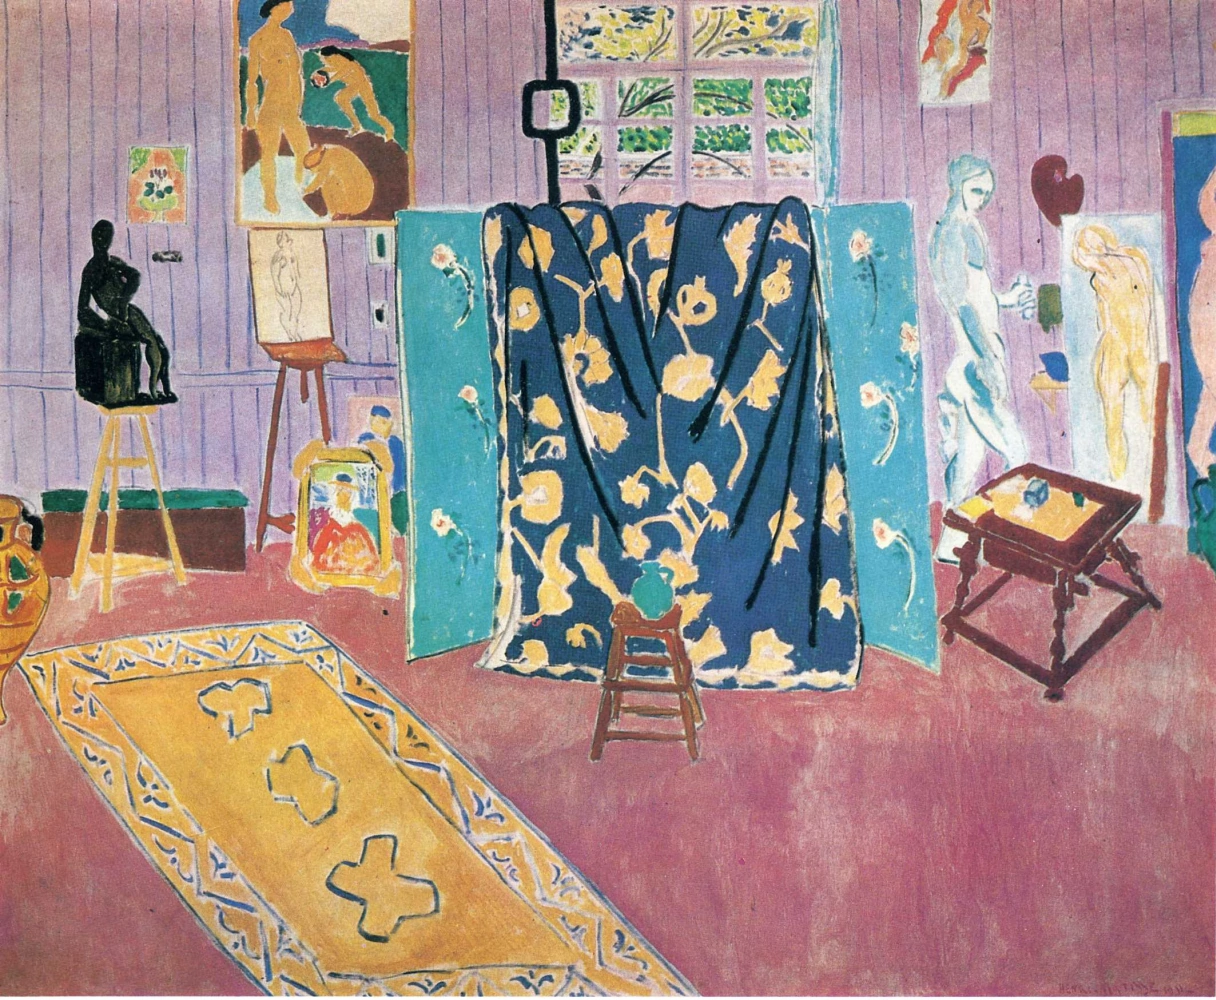 Matisse & the surrogate figure